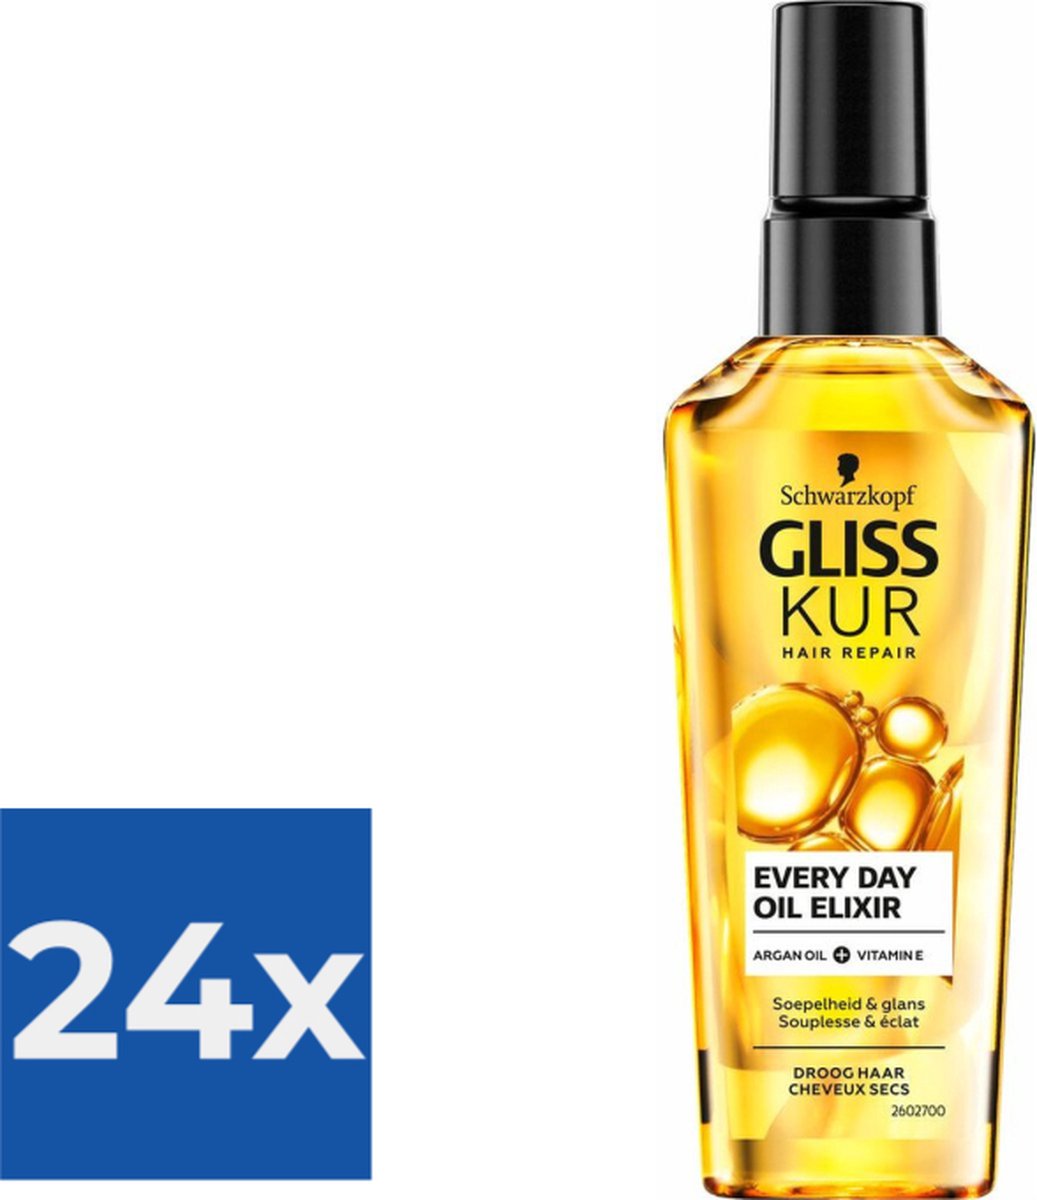 Gliss Kur Every Day Oil Elixir Ultimate Repair - 1 stuk - Voordeelverpakking 24 stuks